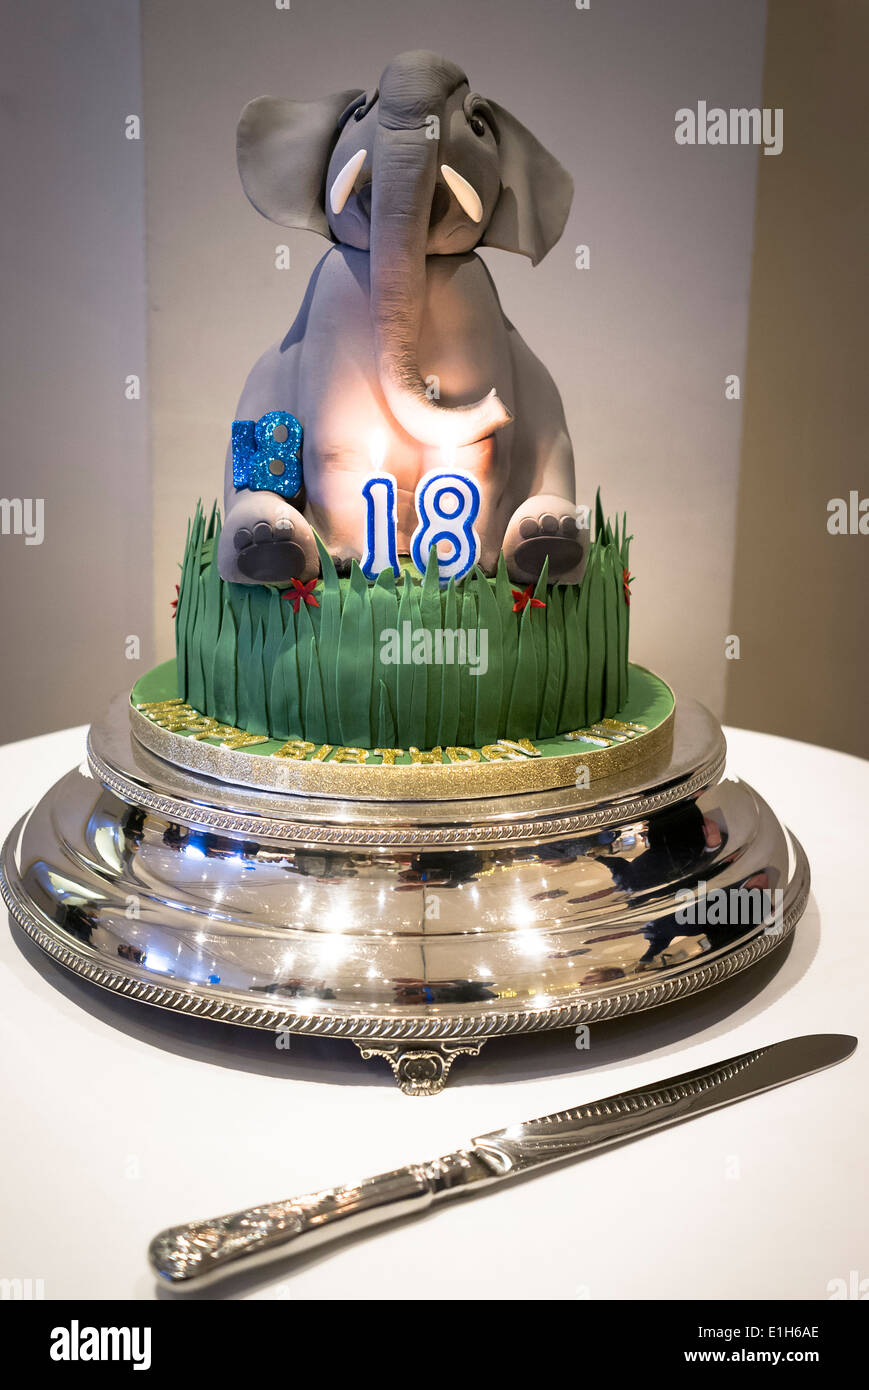 Birthday cake elephant -Fotos und -Bildmaterial in hoher Auflösung – Alamy